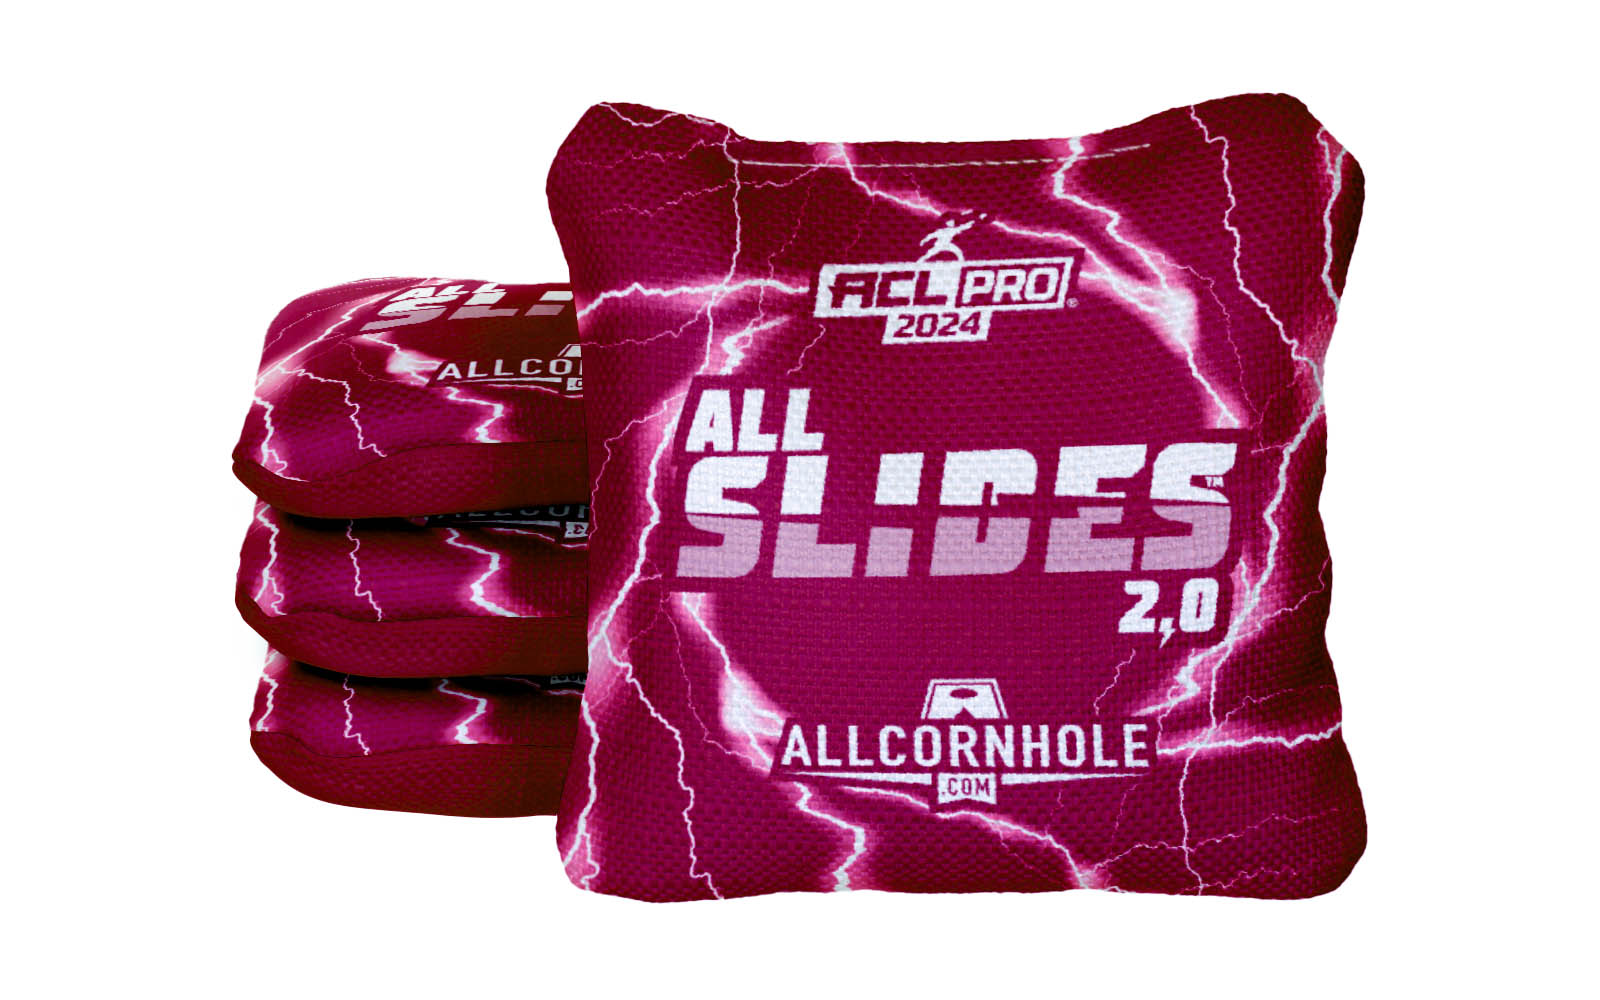 Officially Licensed Collegiate Cornhole Bags - AllCornhole All-Slide 2.0 - Set of 4 - University of Alabama